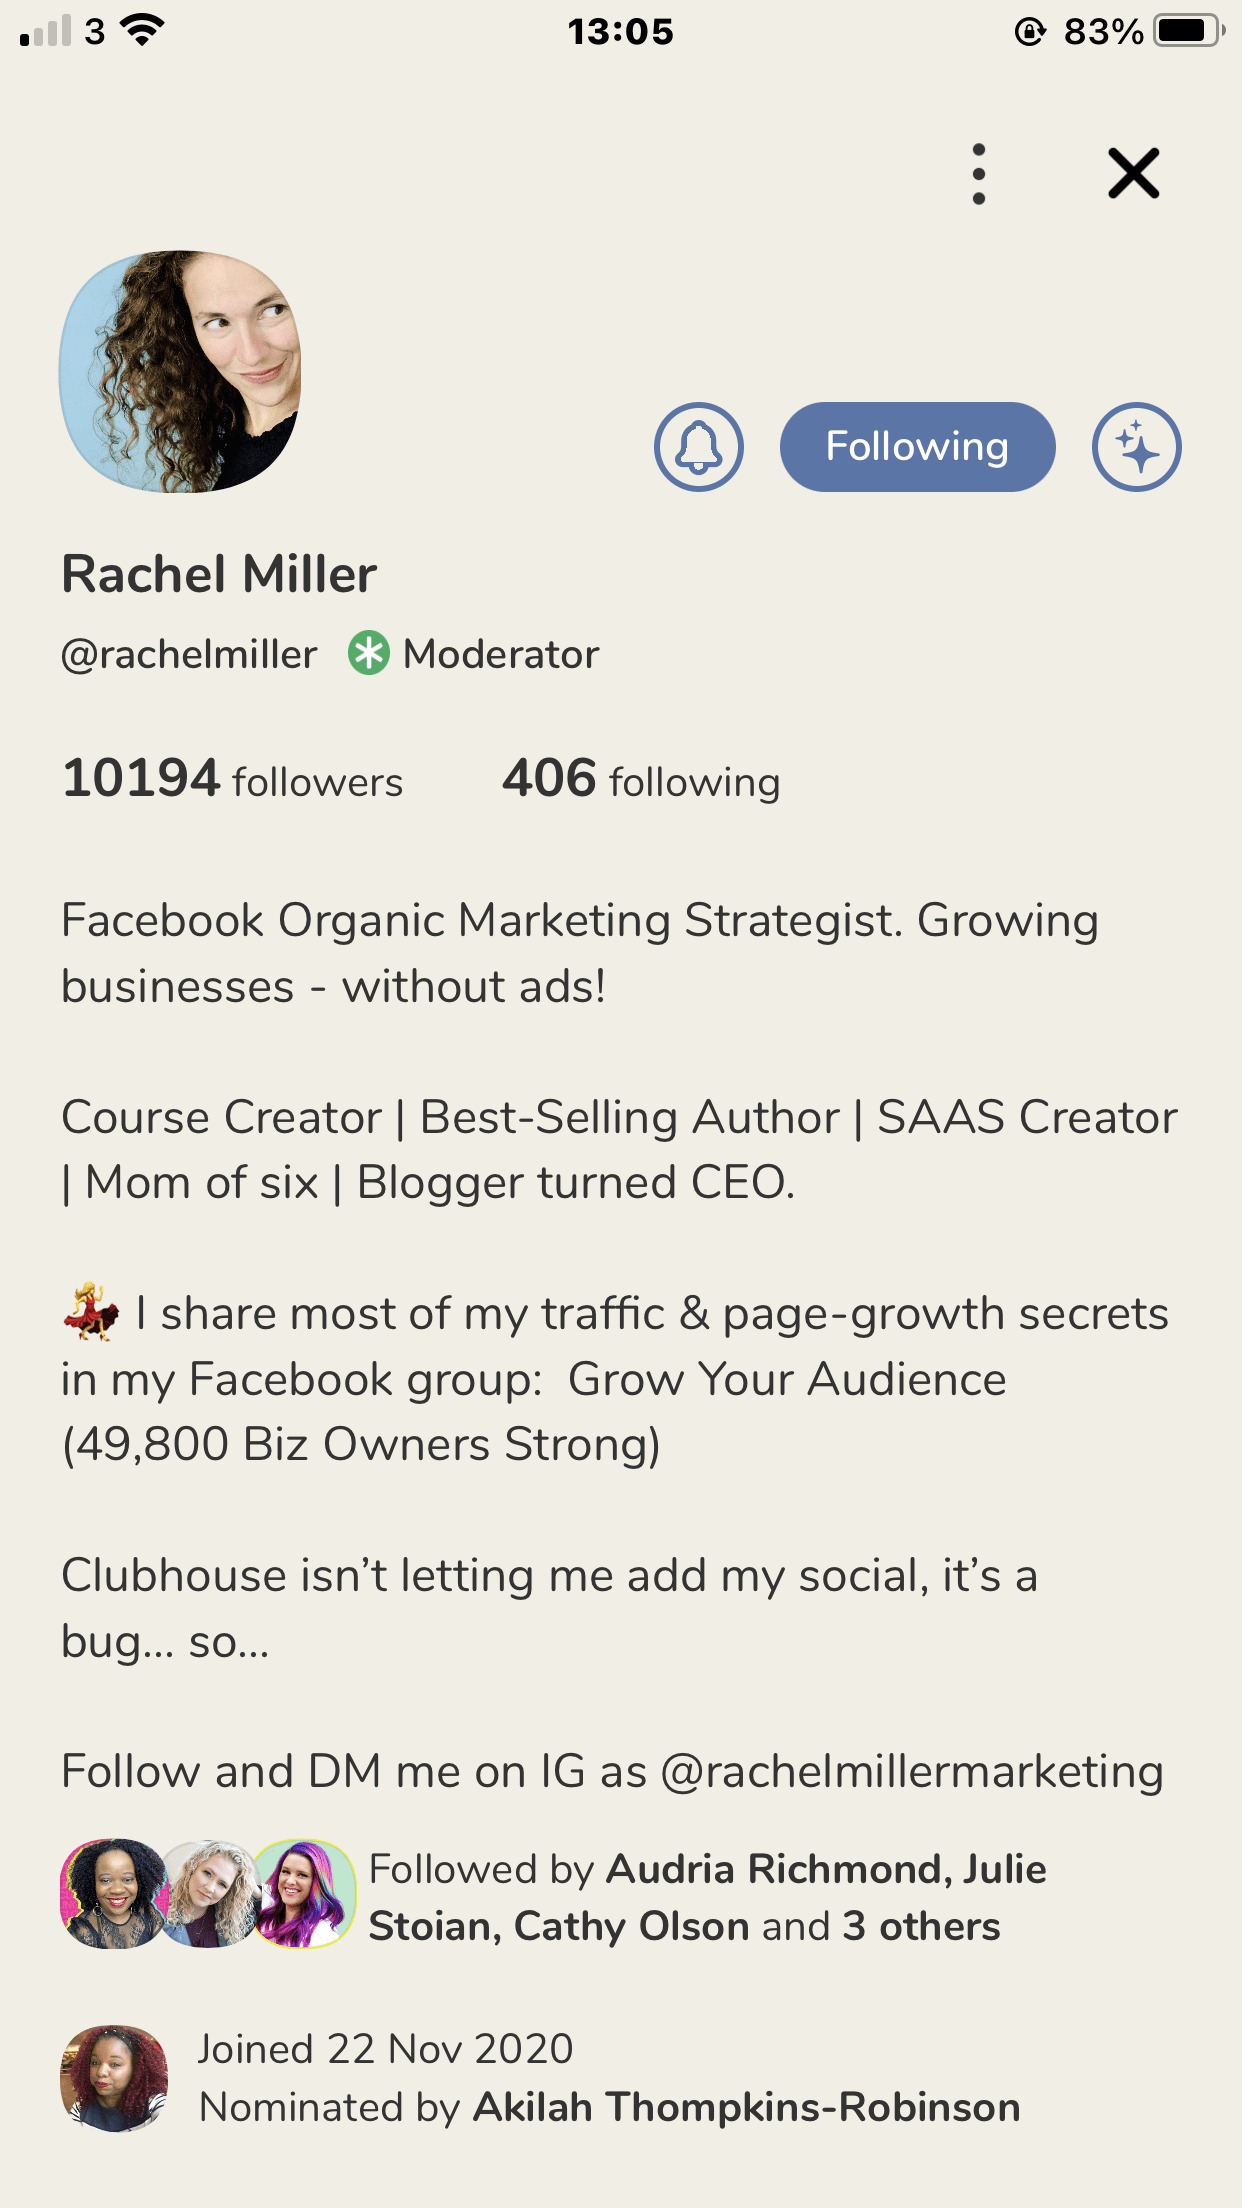 Rachel Miller's clubhouse profile